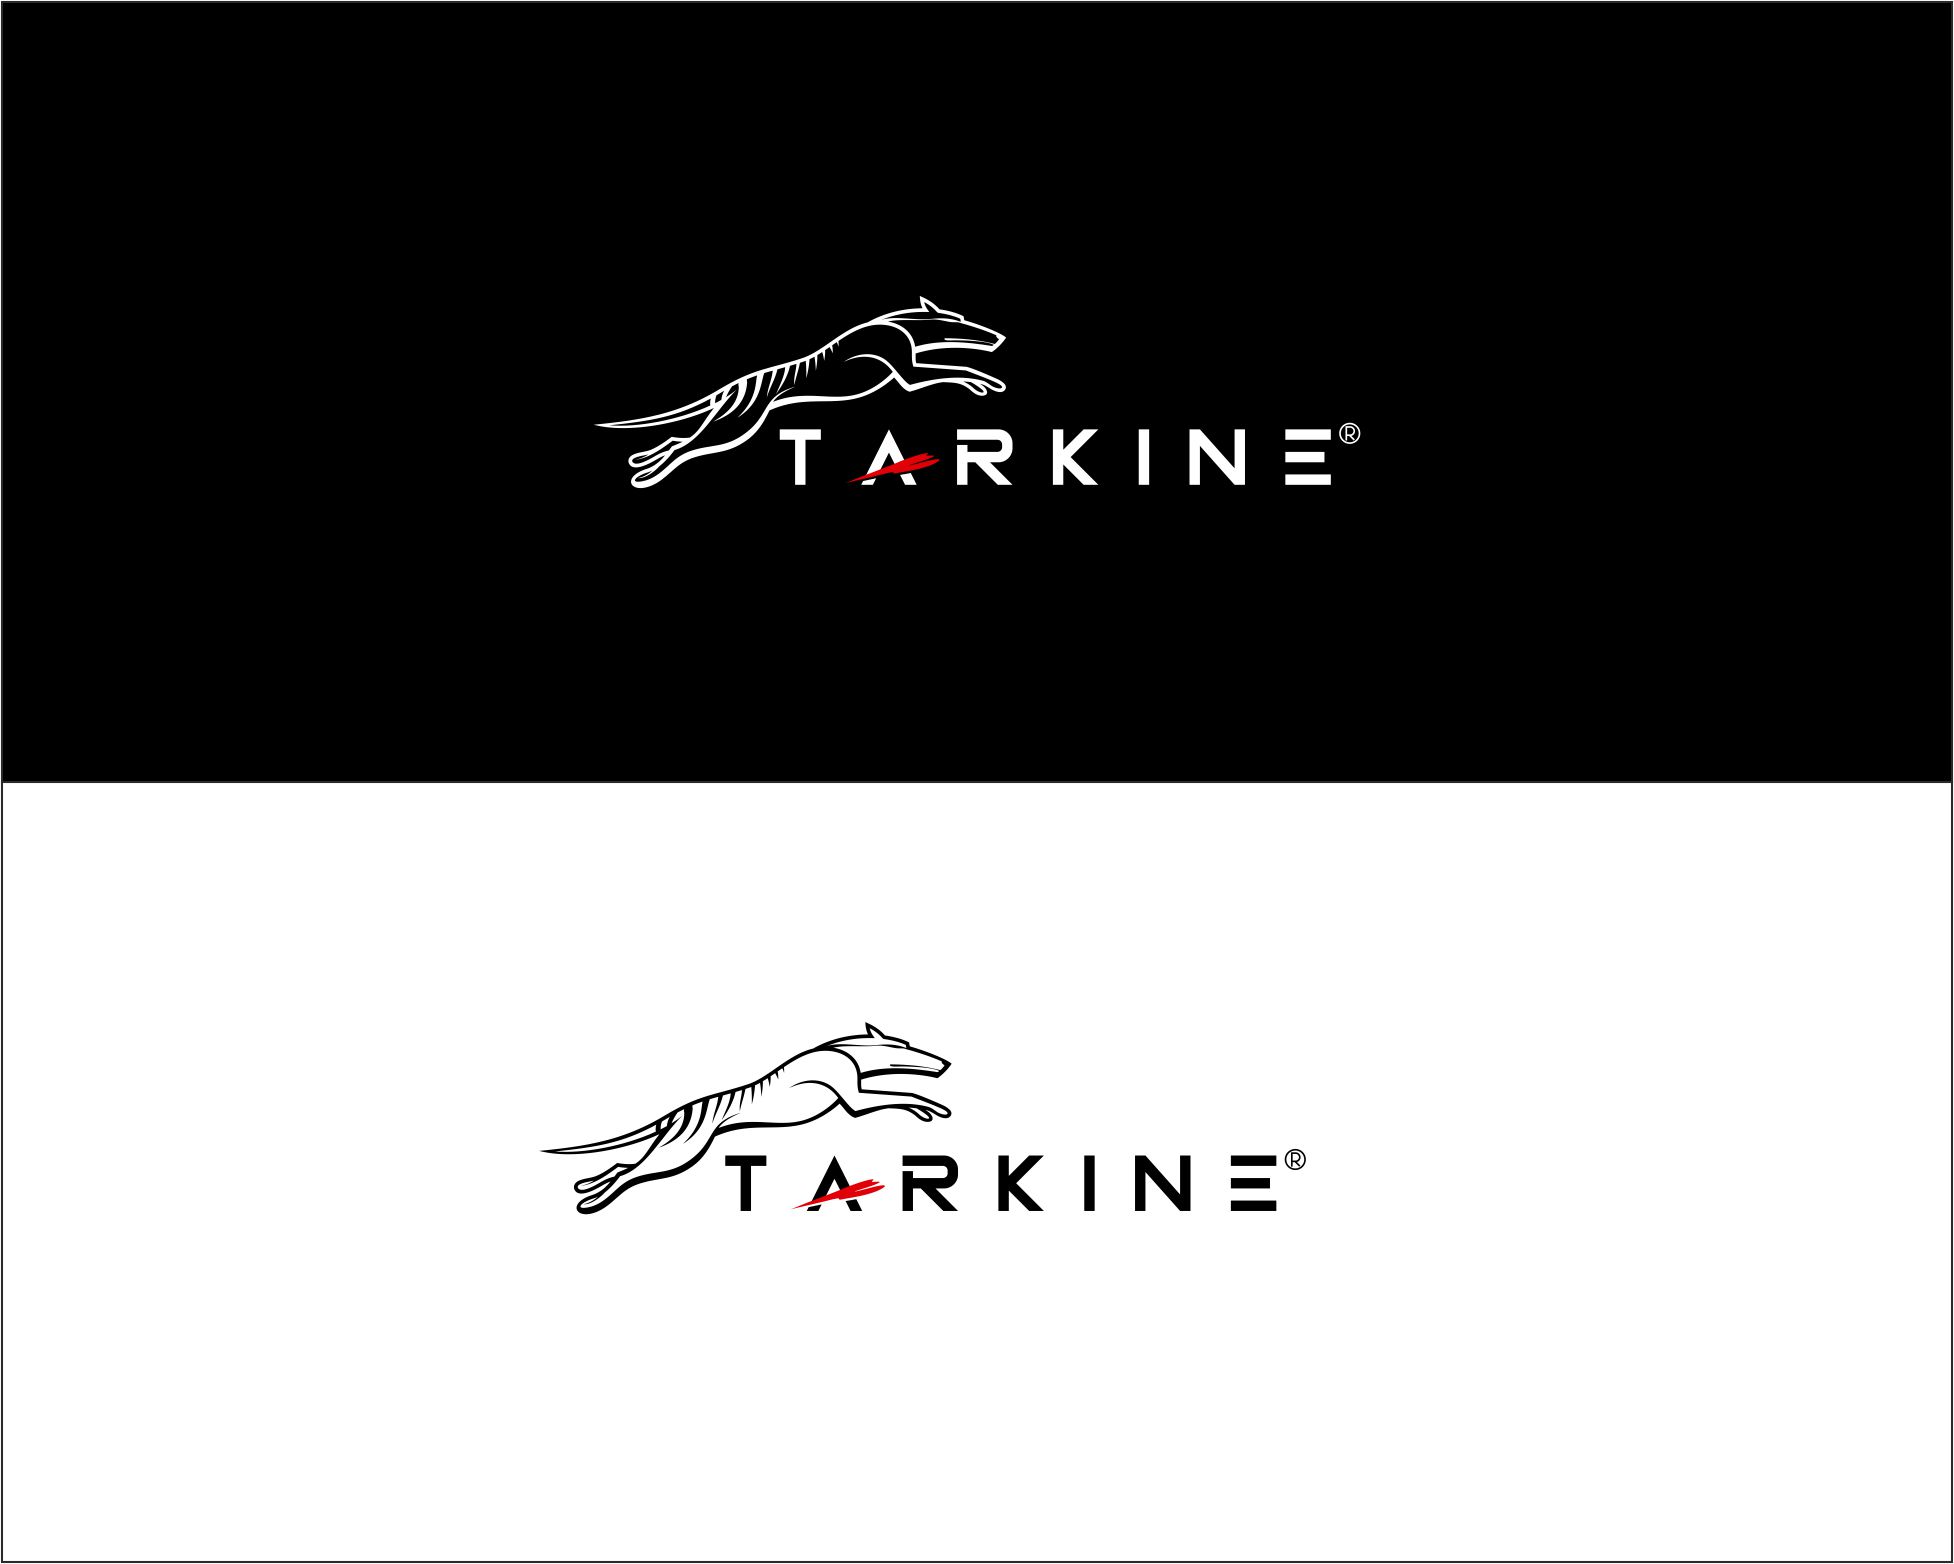 Logo Design entry 1578404 submitted by jangAbayz to the Logo Design for TARKINE run by tarkine